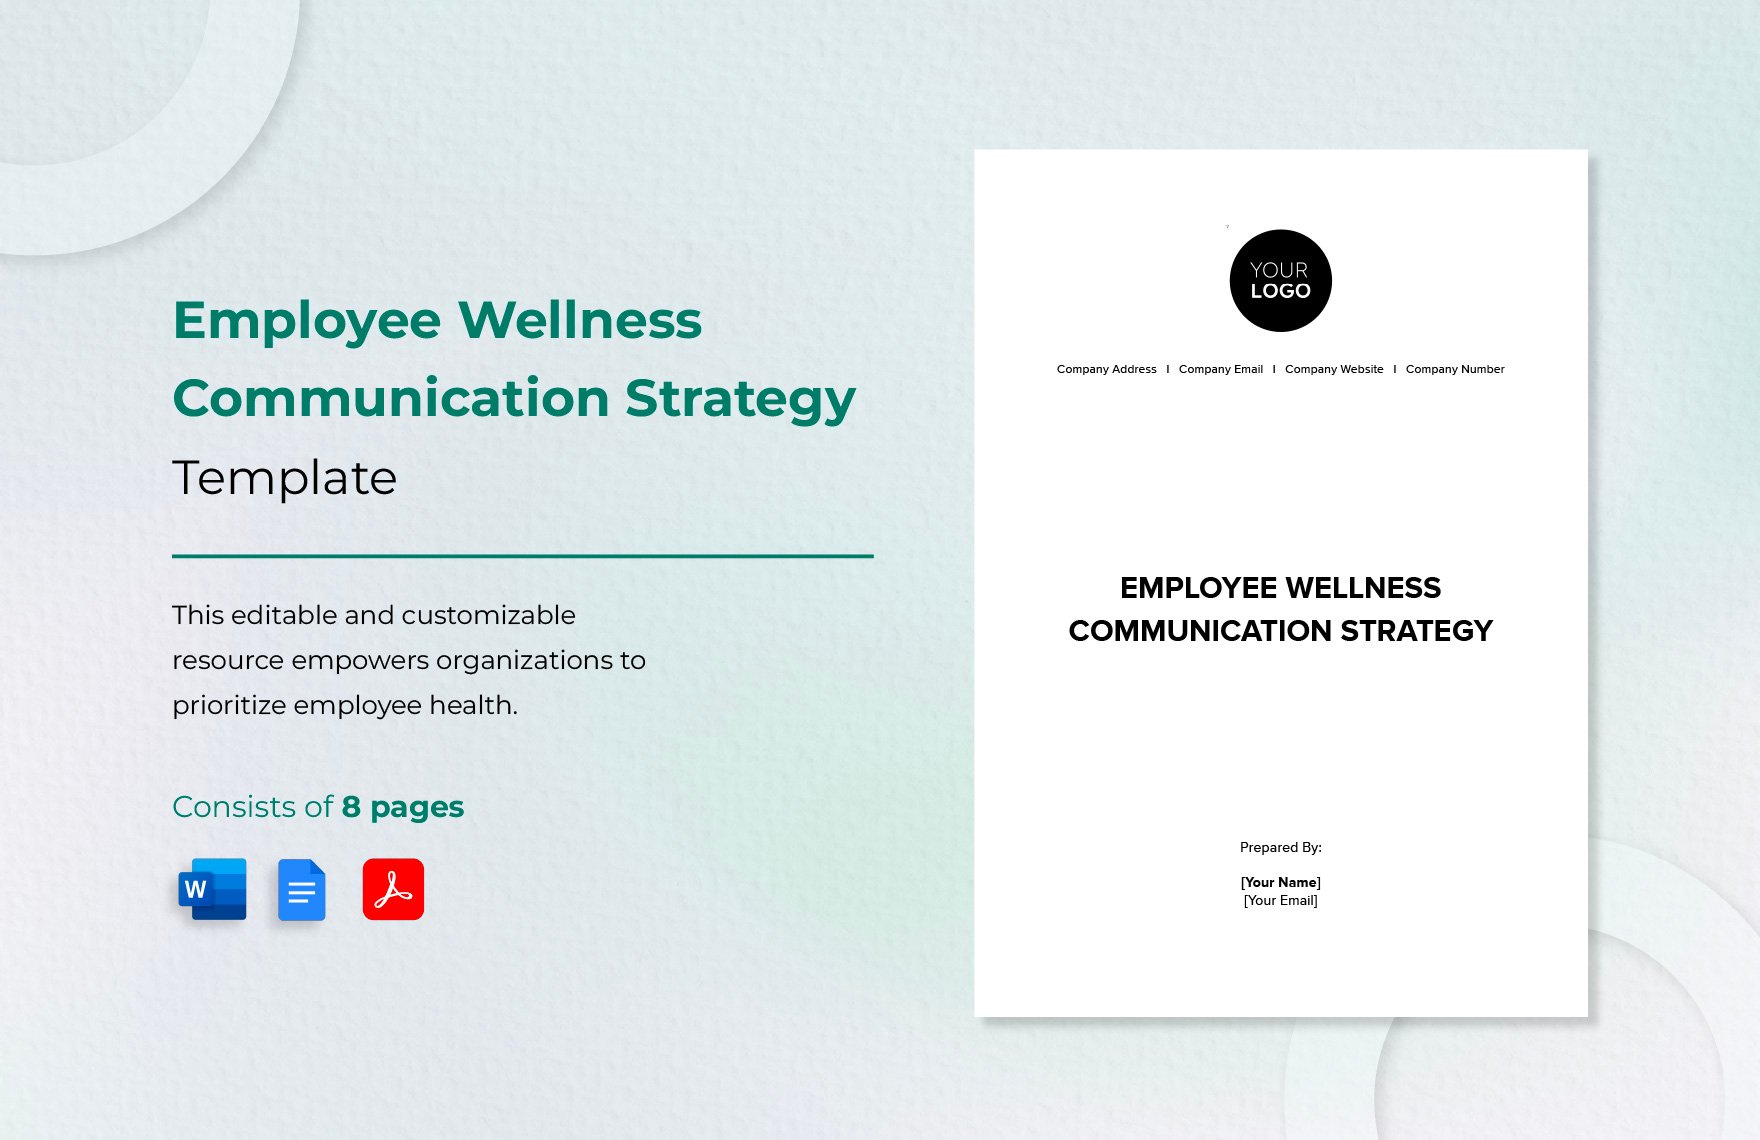 Employee Wellness Communication Strategy Template